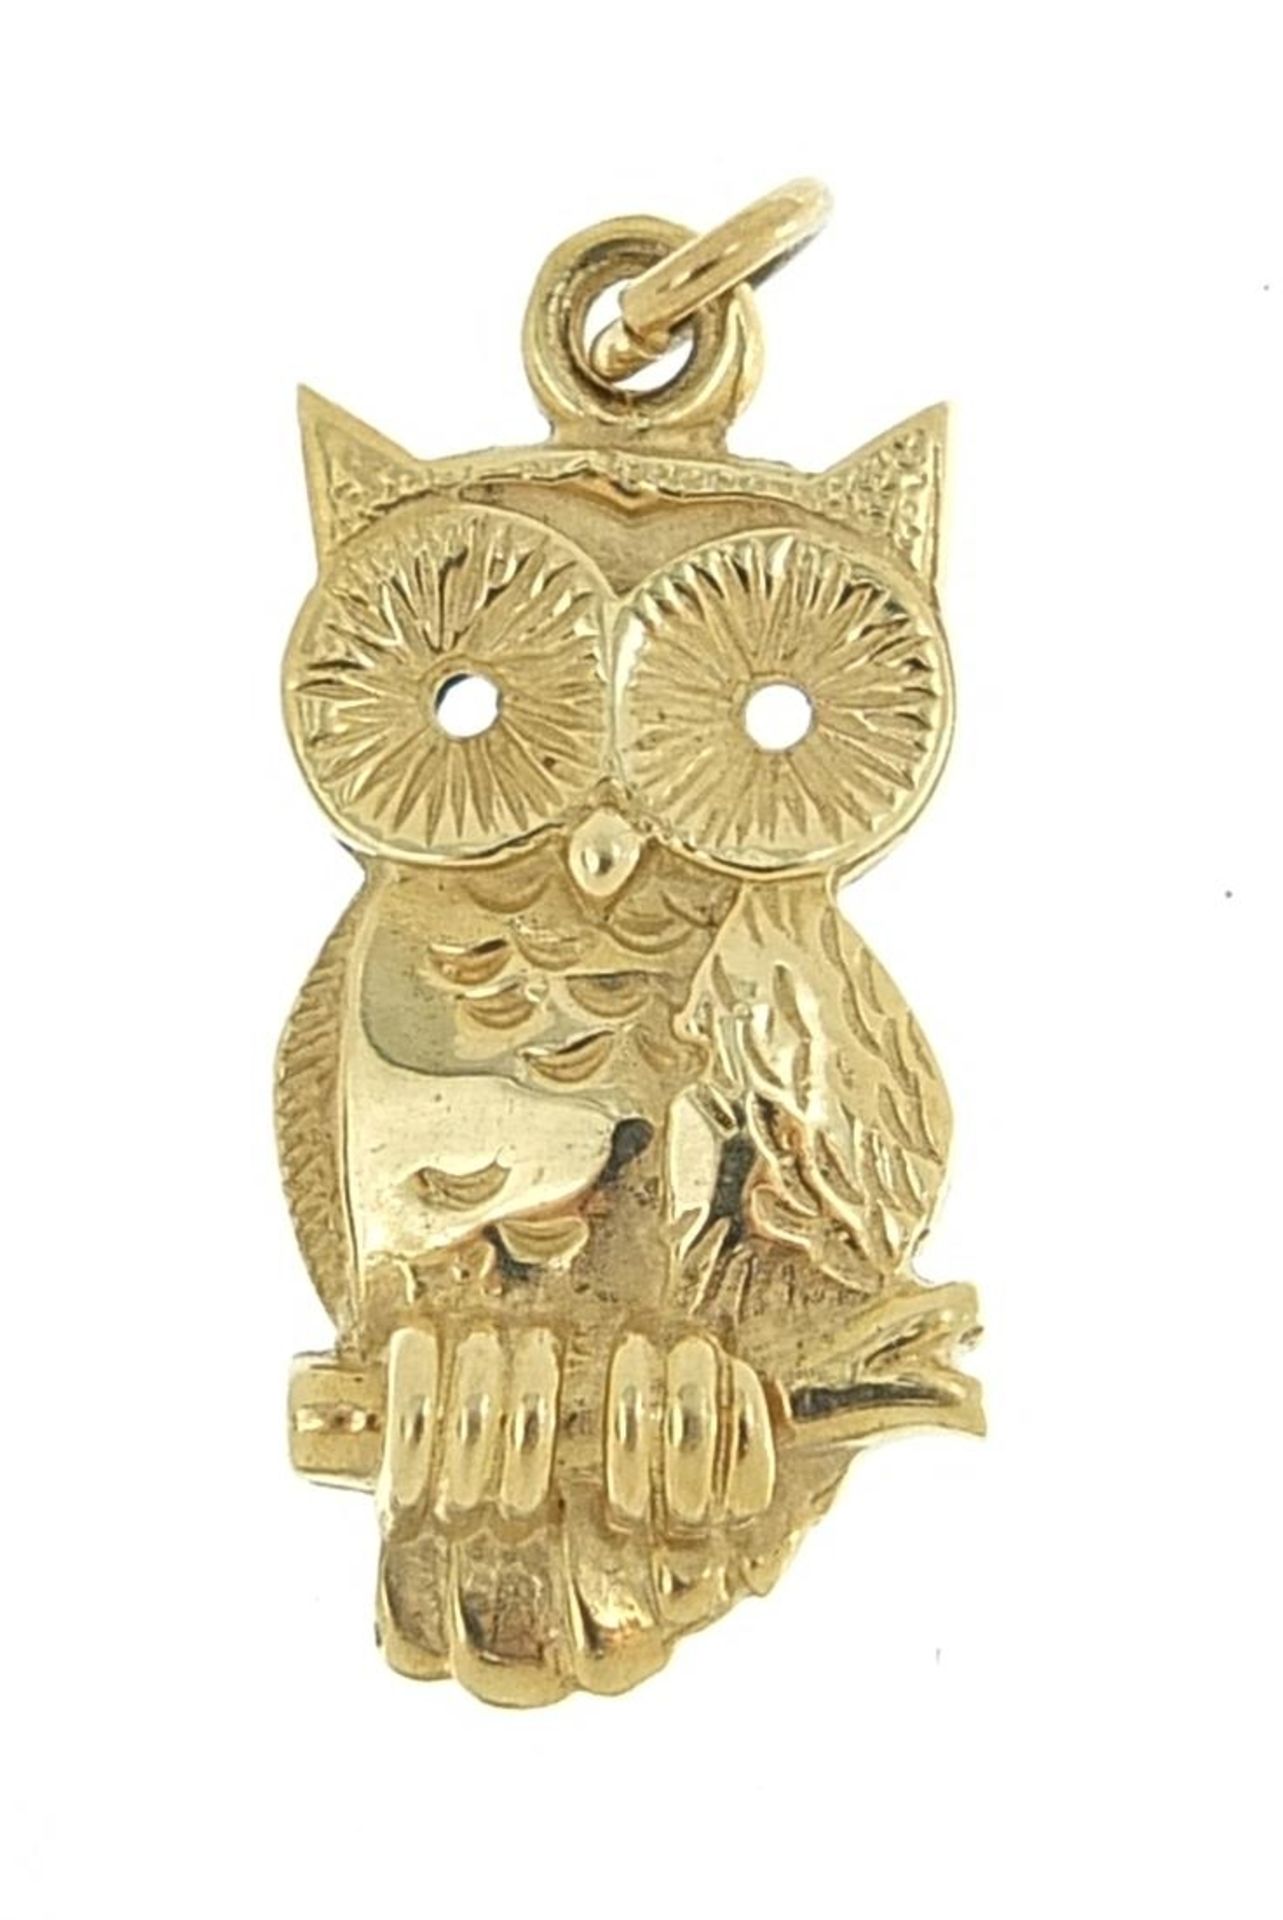 9ct gold owl charm, 2.3cm high, 2.9g